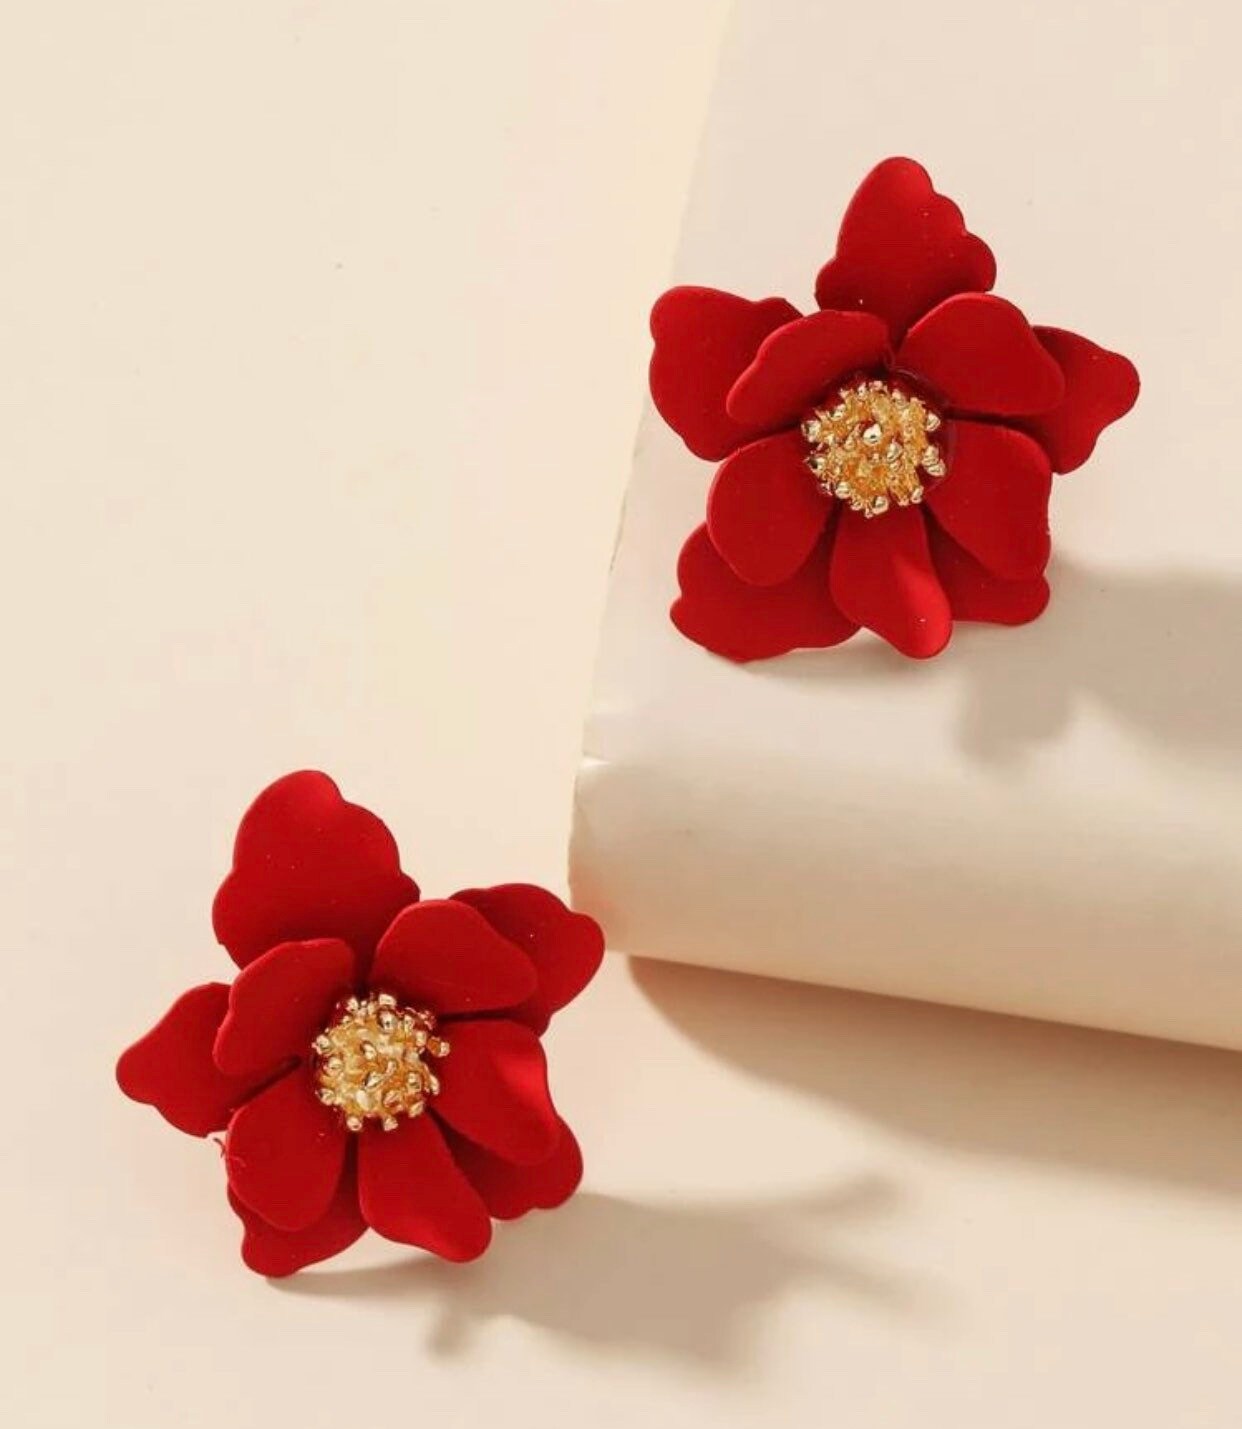 Natasha Satin Red Flower Drop Lightweight Earrings | eBay